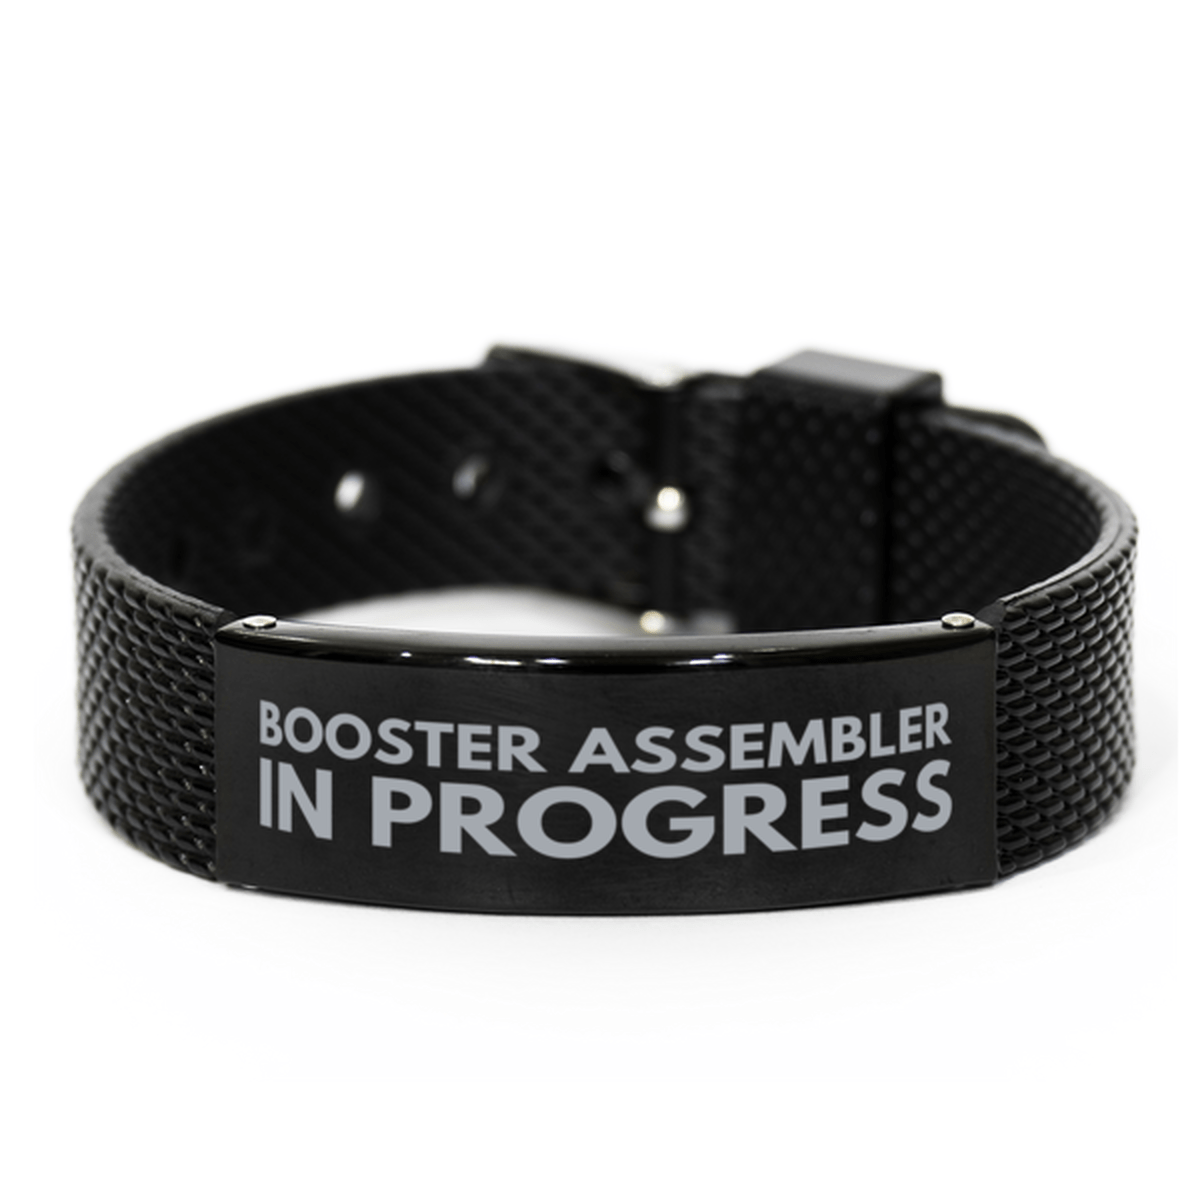 Inspirational Booster Assembler Black Shark Mesh Bracelet, Booster Assembler In Progress, Best Graduation Gifts for Students